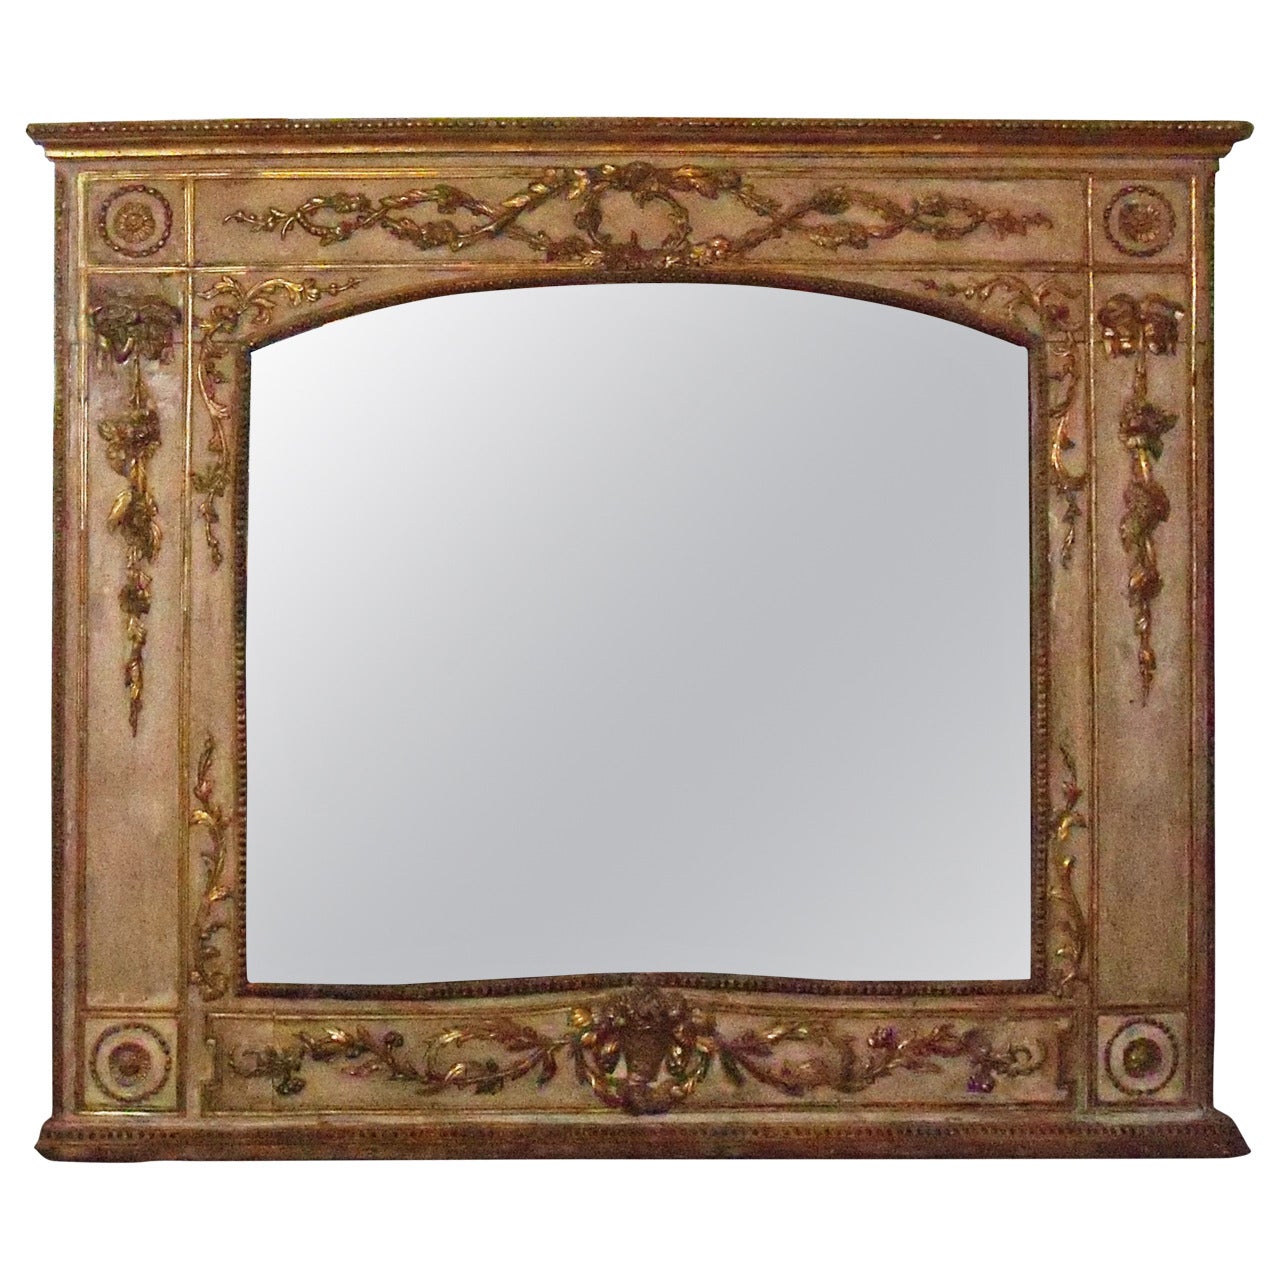 Early 19th Century Italian Mirror